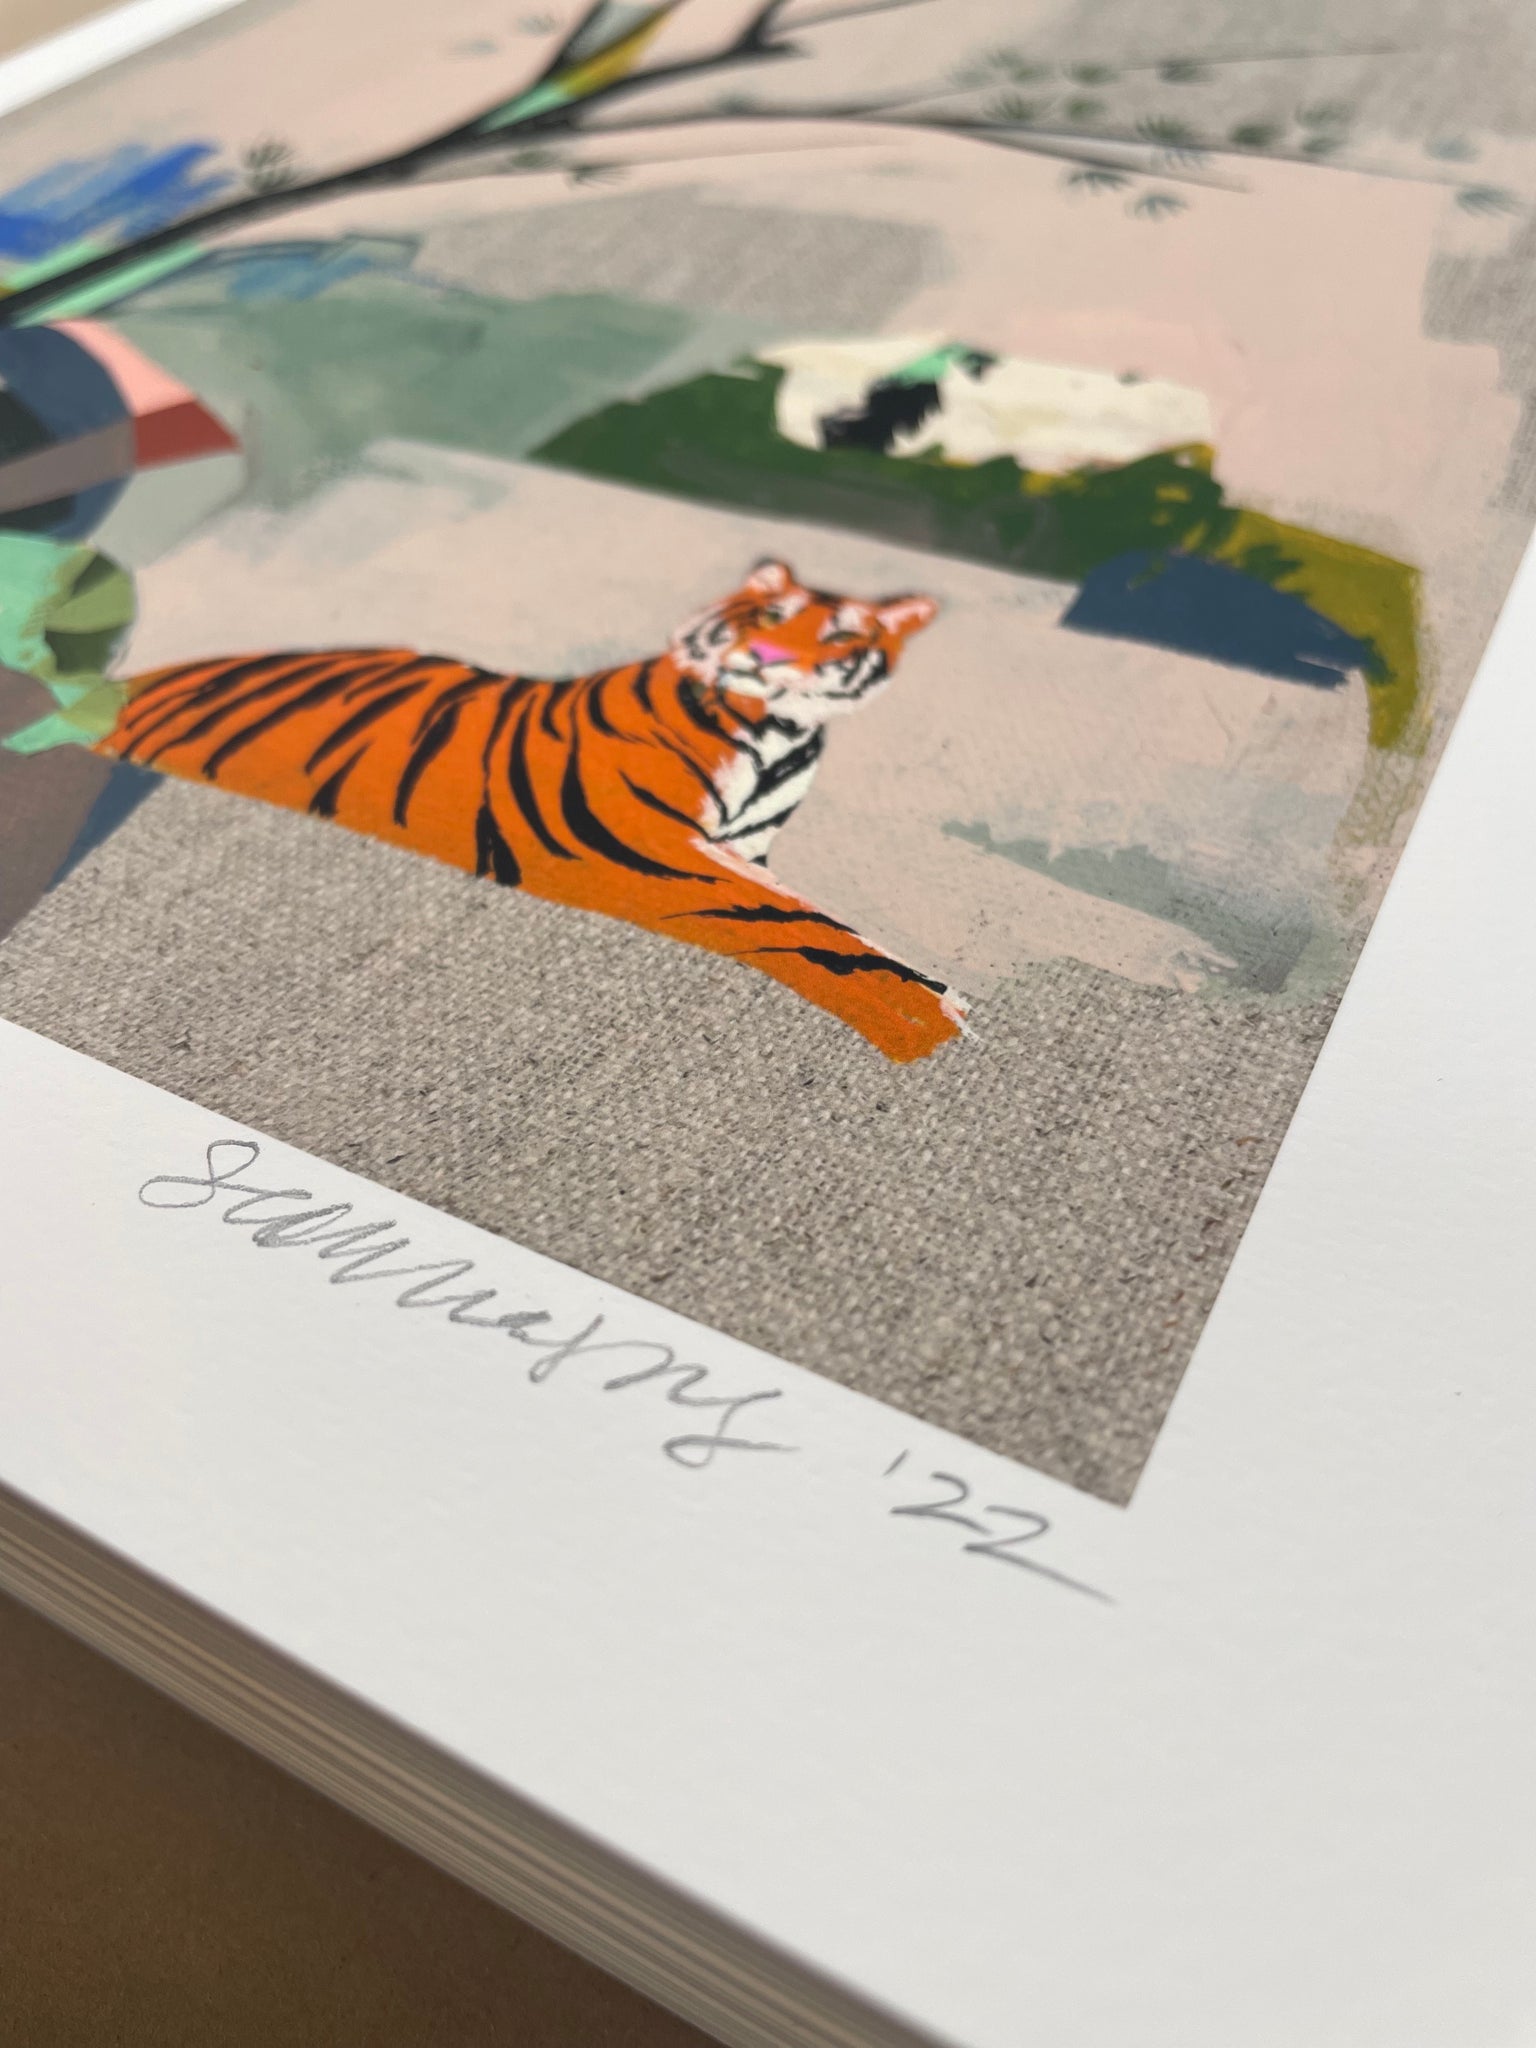 limited edition print of a tiger by Seonna Hong